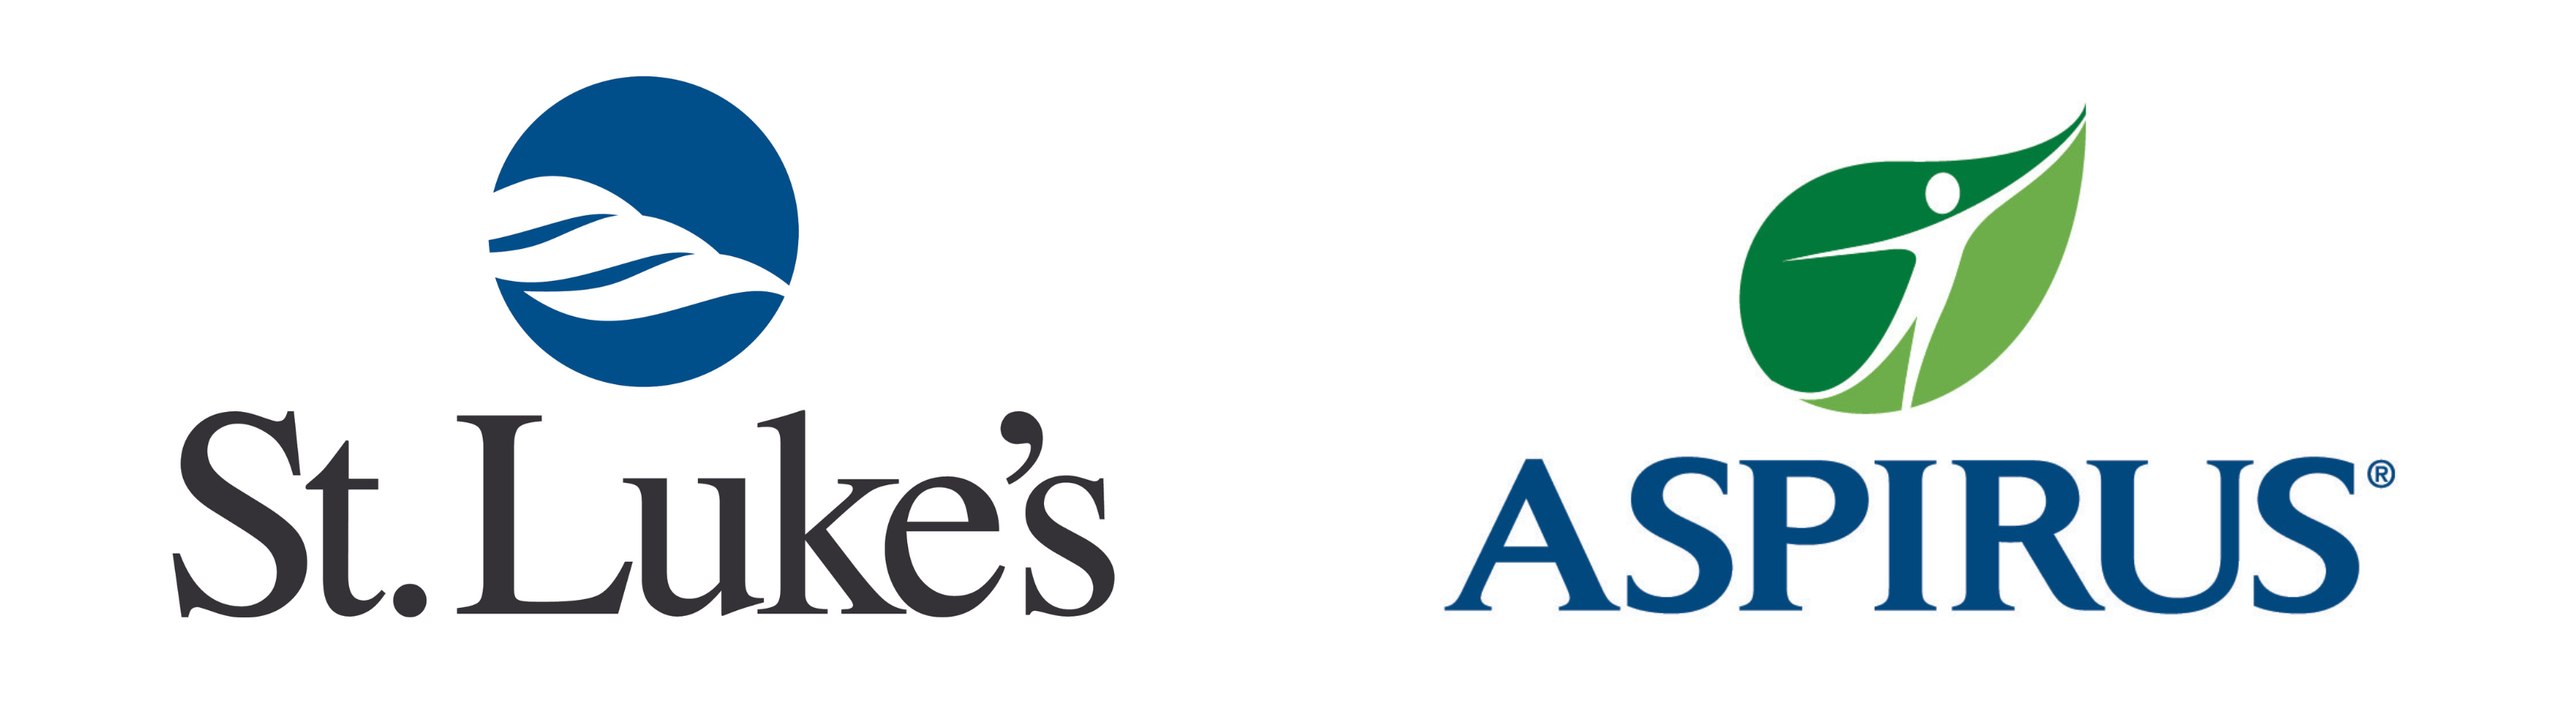 St. Luke's and Aspirus Health logos